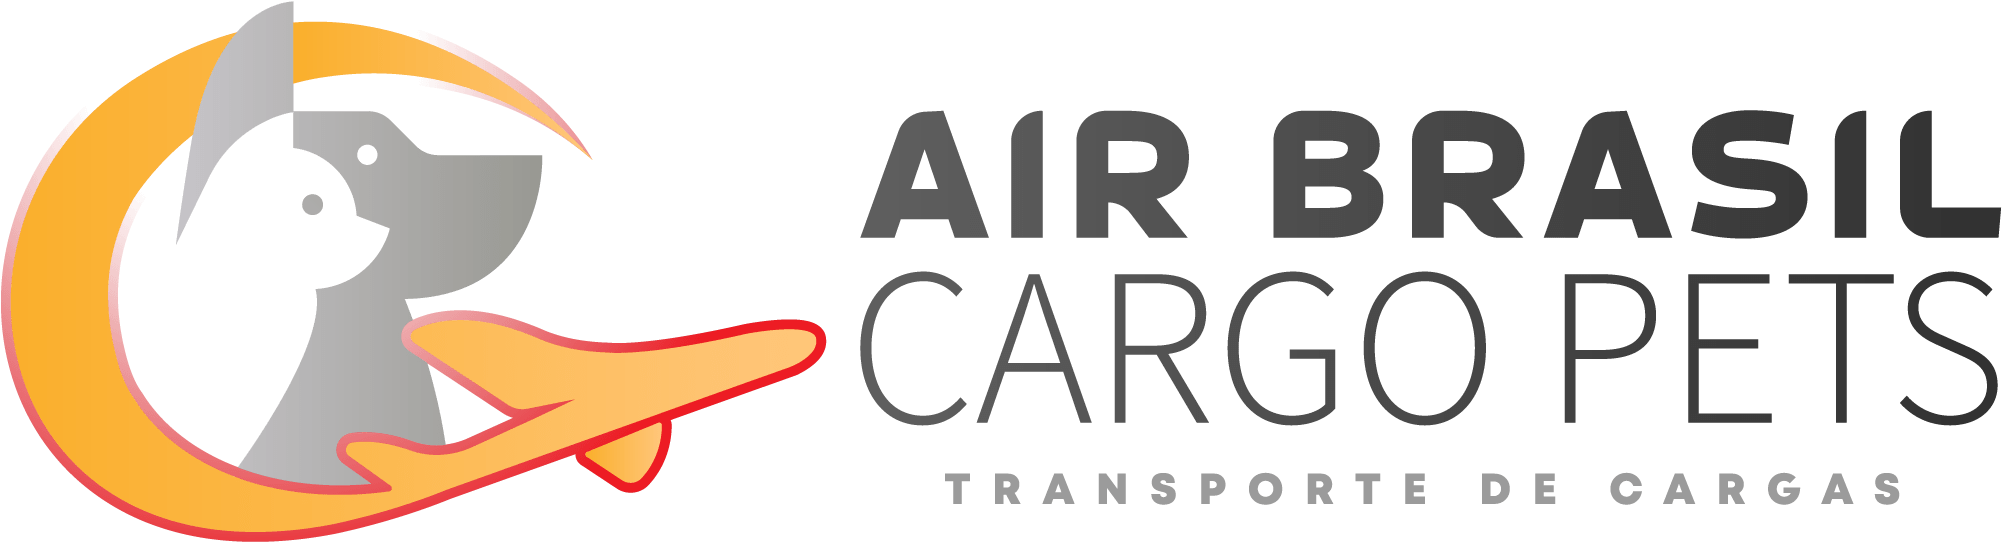 Air Brasil Cargo Pets